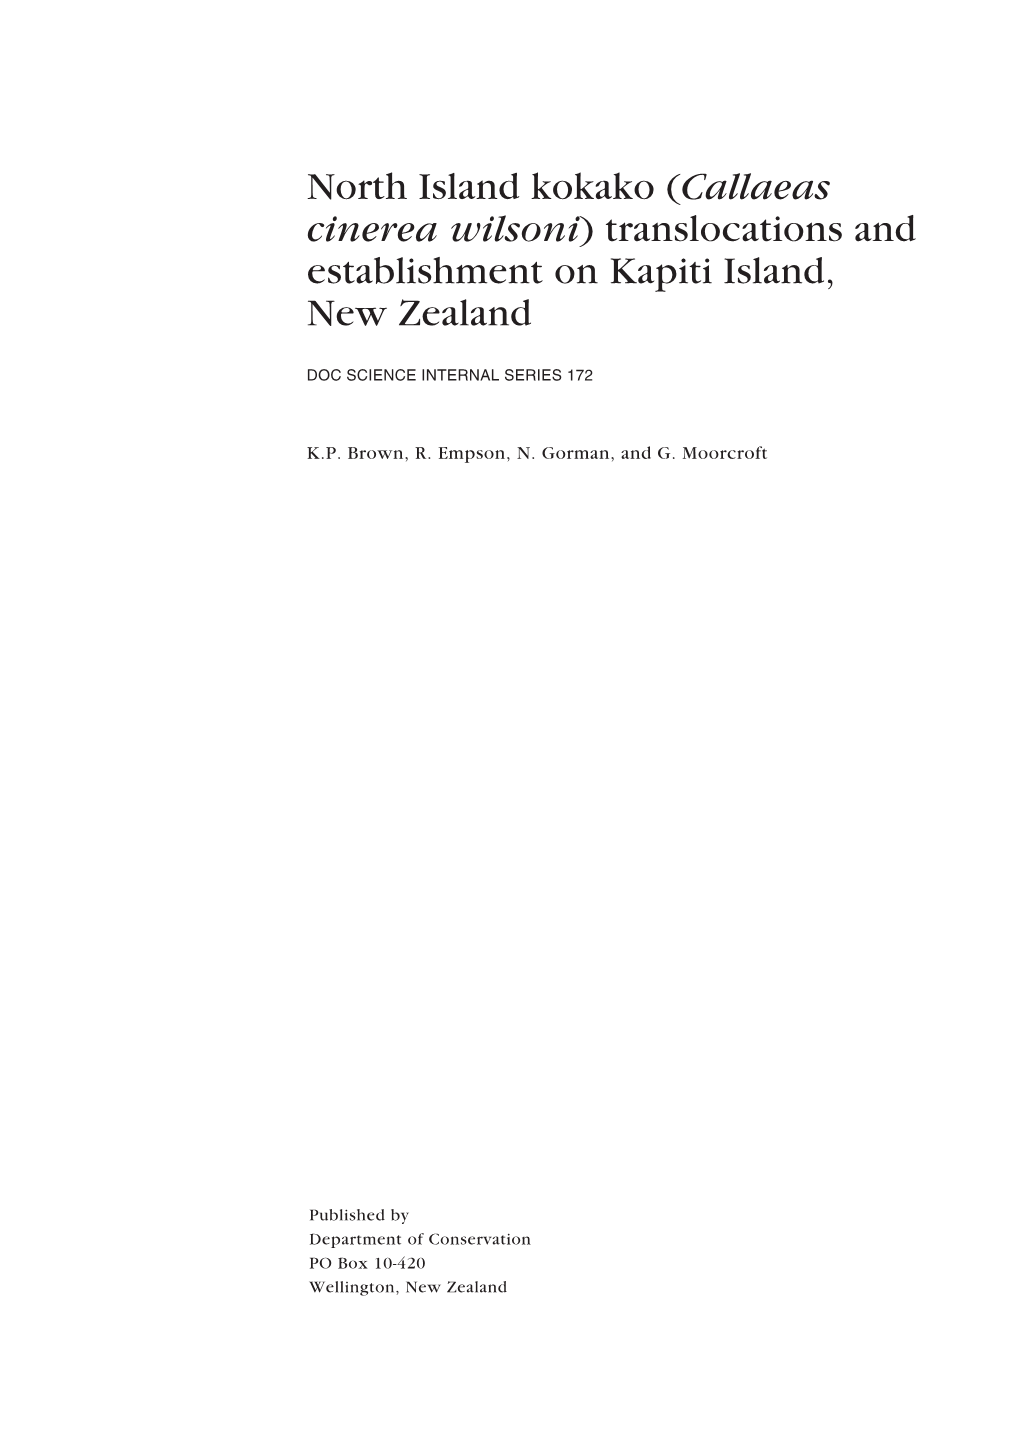 North Island Kokako (Callaeas Cinerea Wilsoni) Translocations and Establishment on Kapiti Island, New Zealand